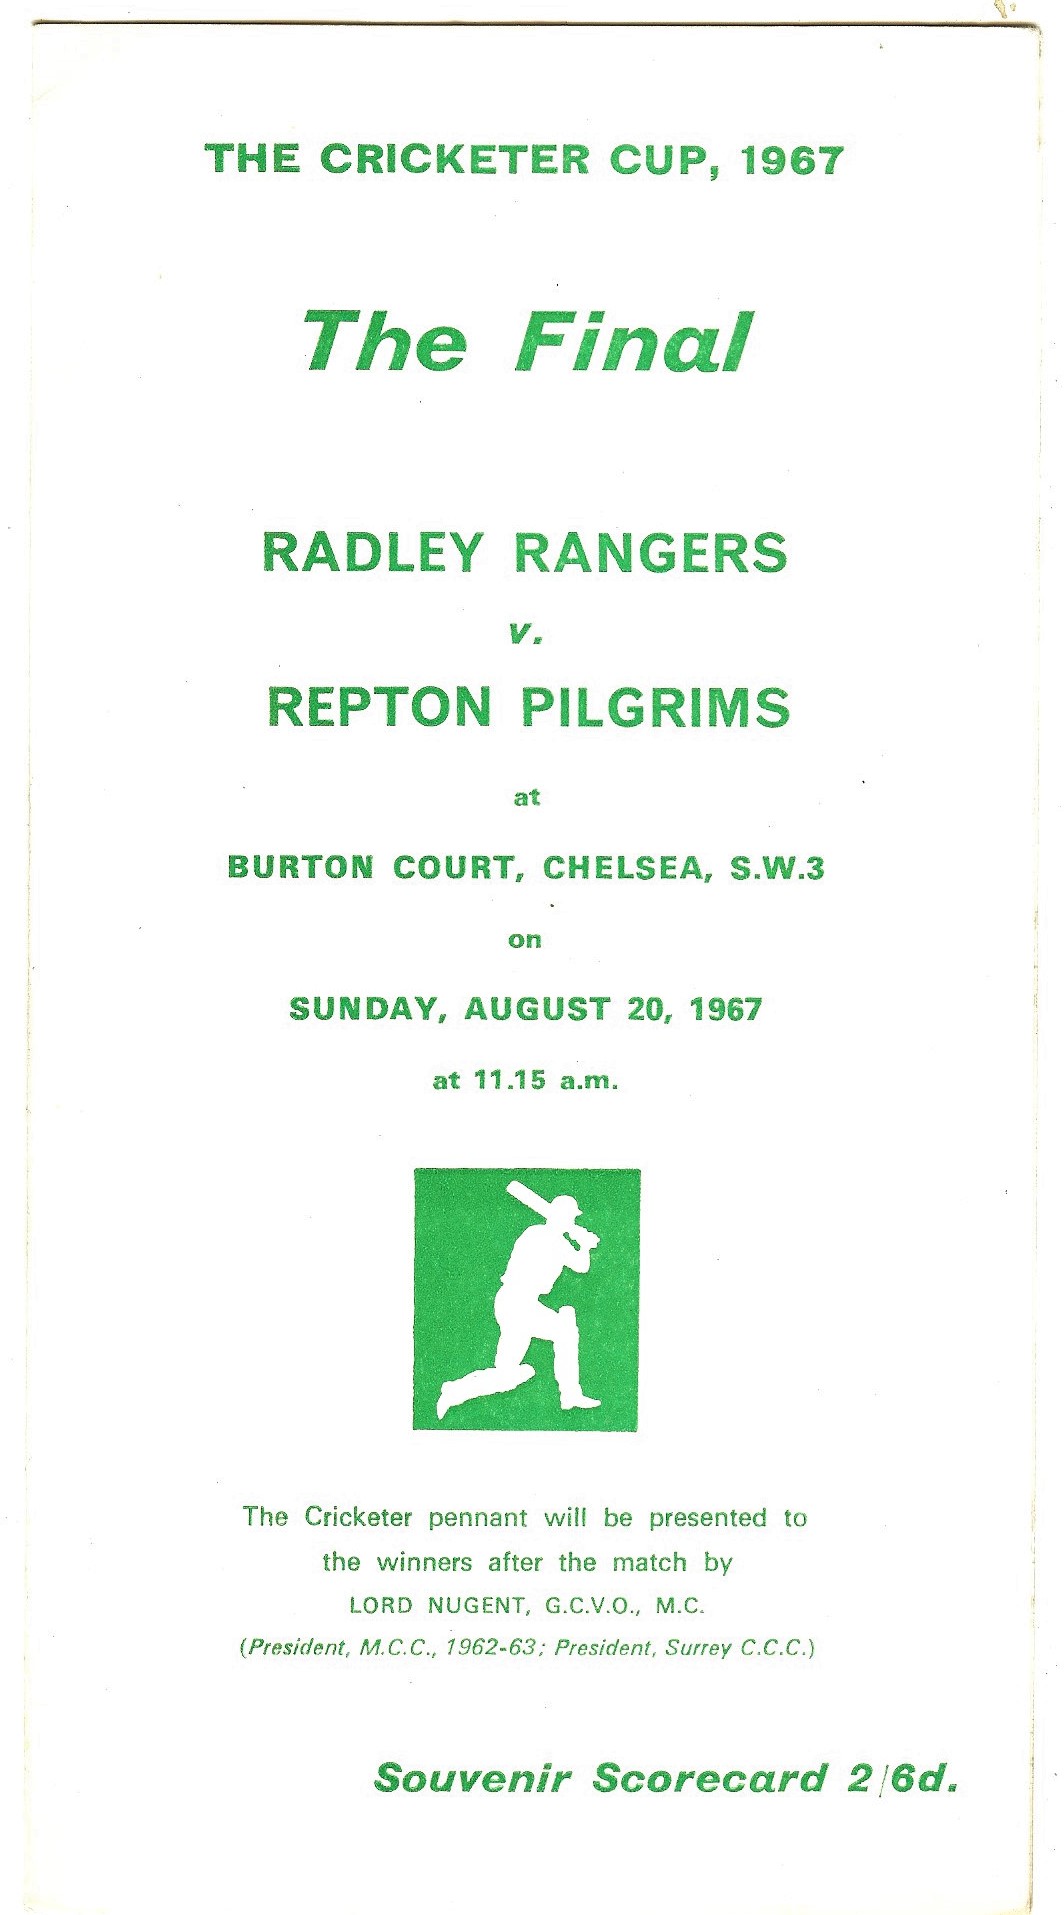 CRICKET - 1967 RADLEY RANGERS V REPTON PILGRIMS SCORECARD @ BURTON COURT CHELSEA